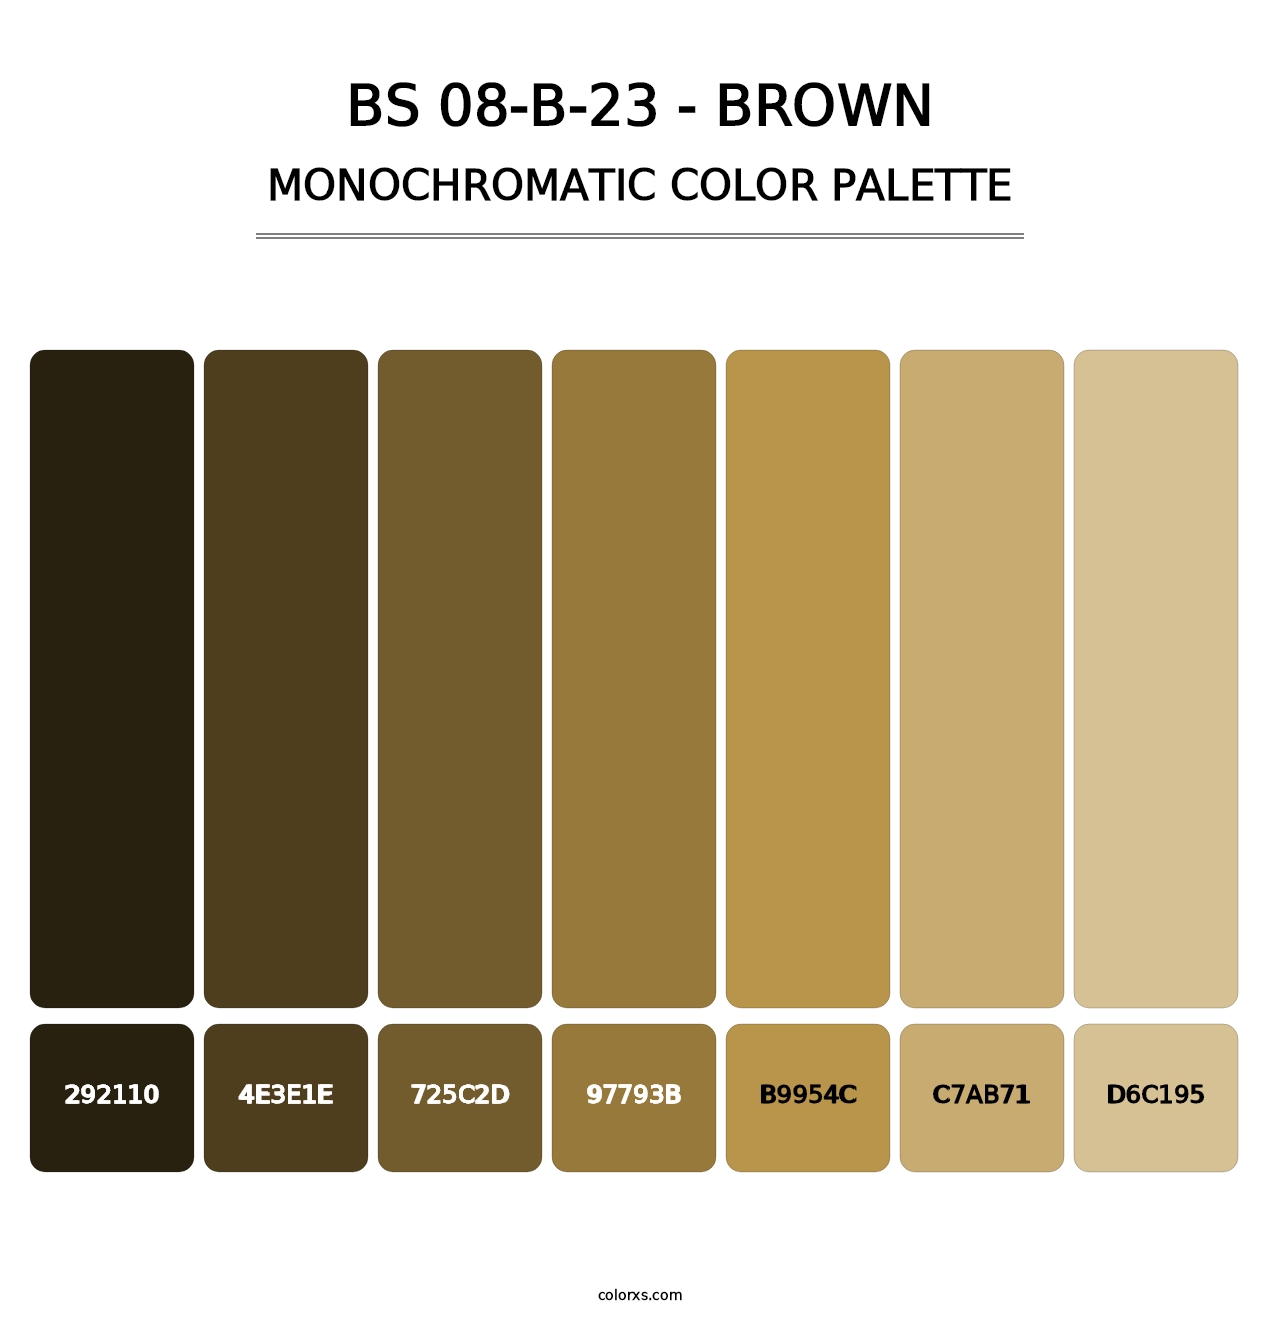 BS 08-B-23 - Brown - Monochromatic Color Palette